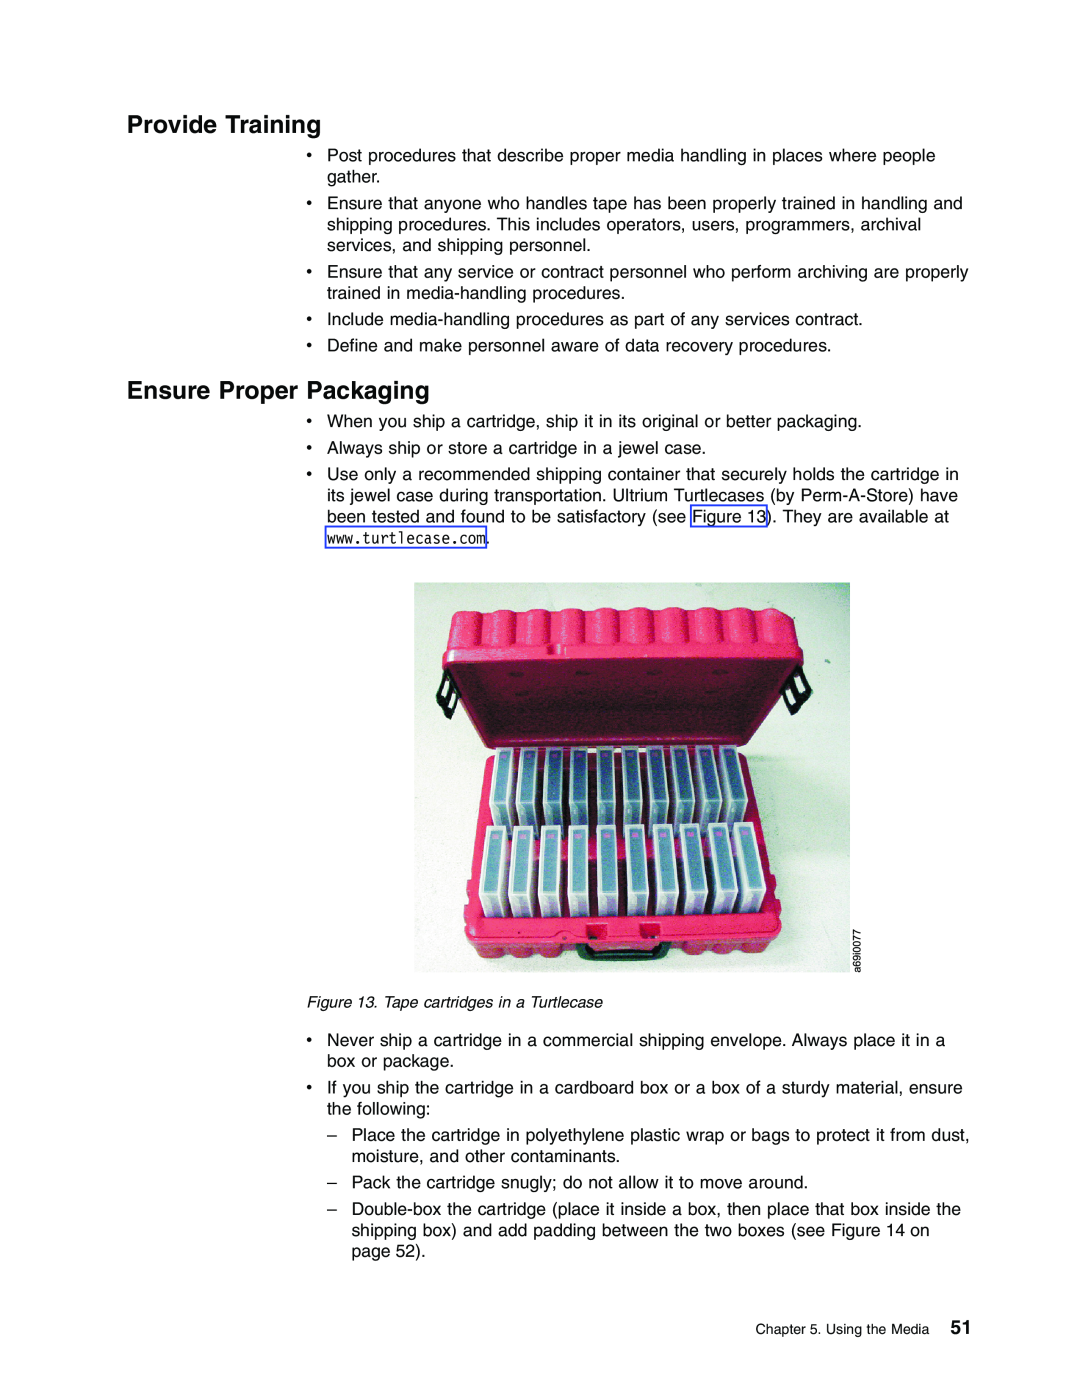 IBM T400F manual Provide Training, Ensure Proper Packaging 